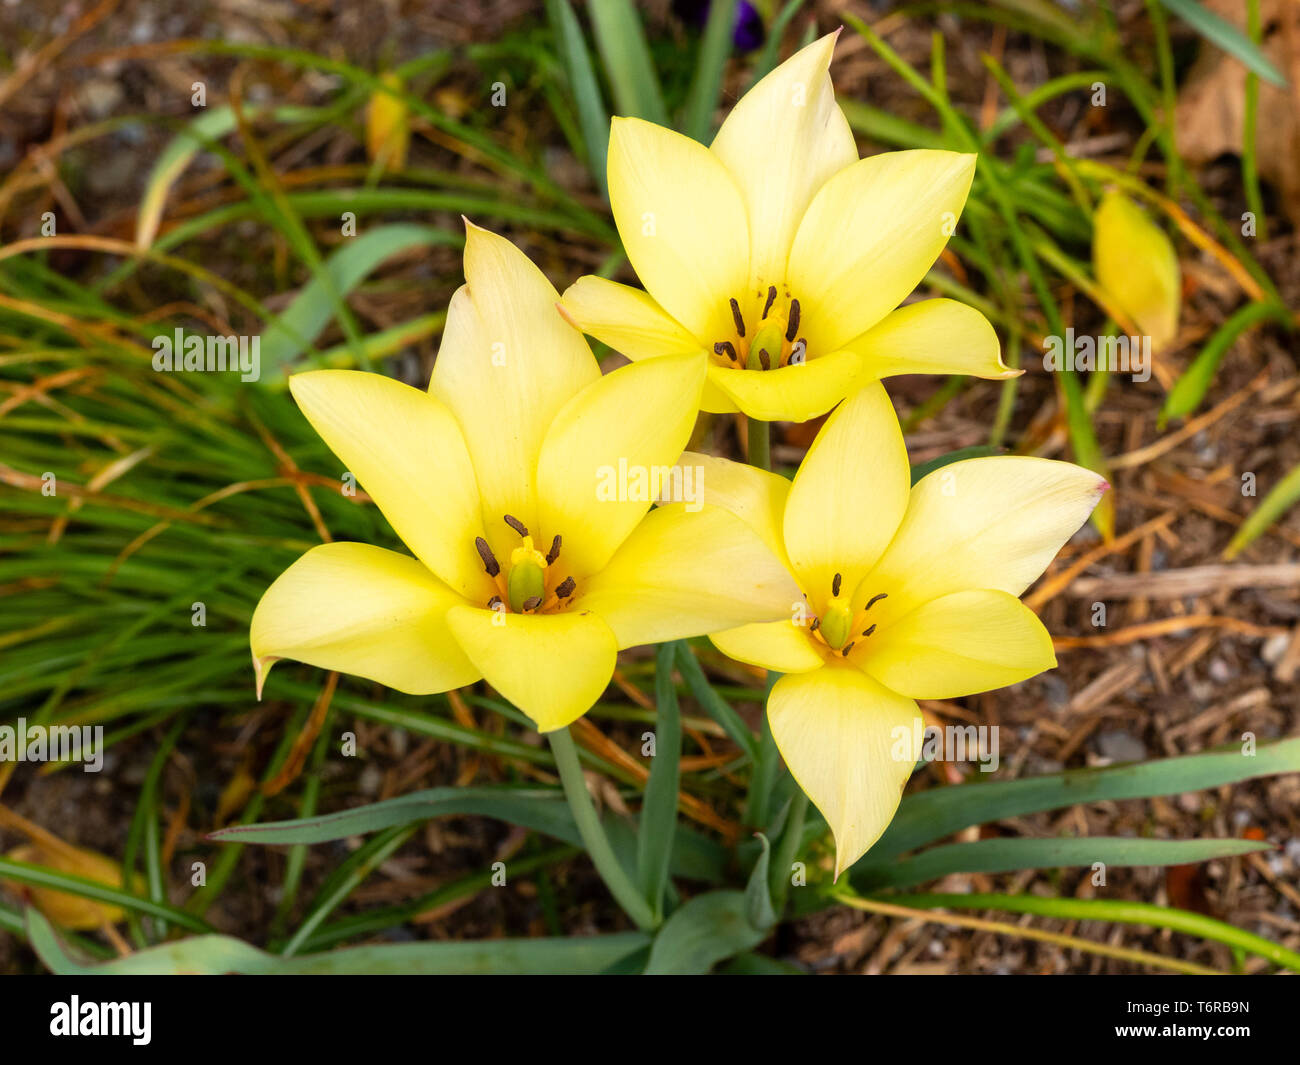 Gelb Frühling Blumen der Hardy botanischen Tulpen, Tulipa linifolia (Batalinii Gruppe) Stockfoto